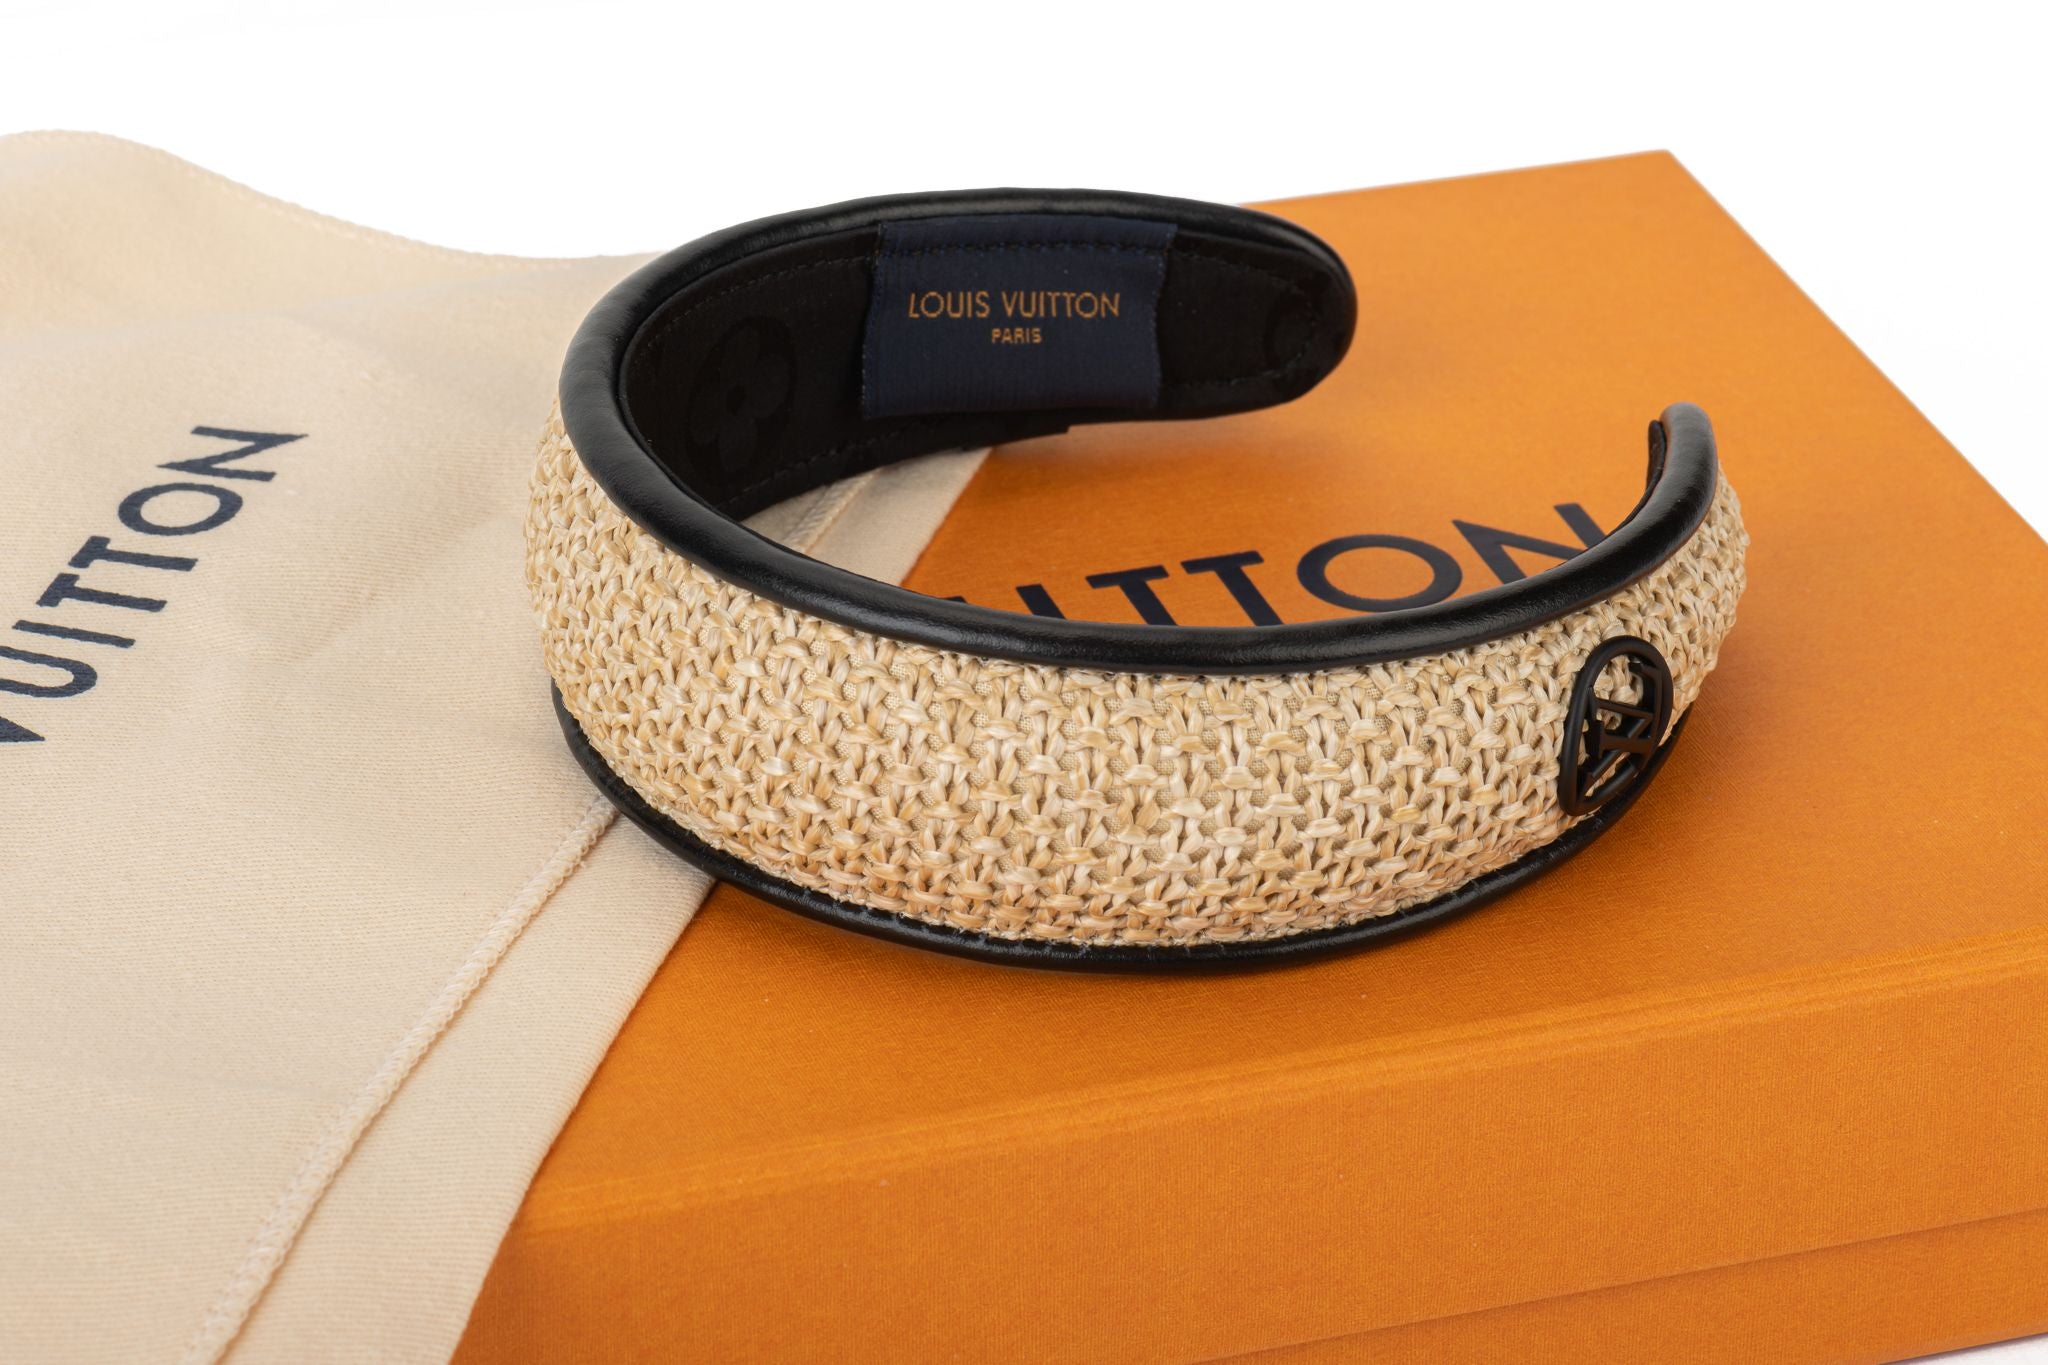 Louis Vuitton Belts - One of each please Santa!